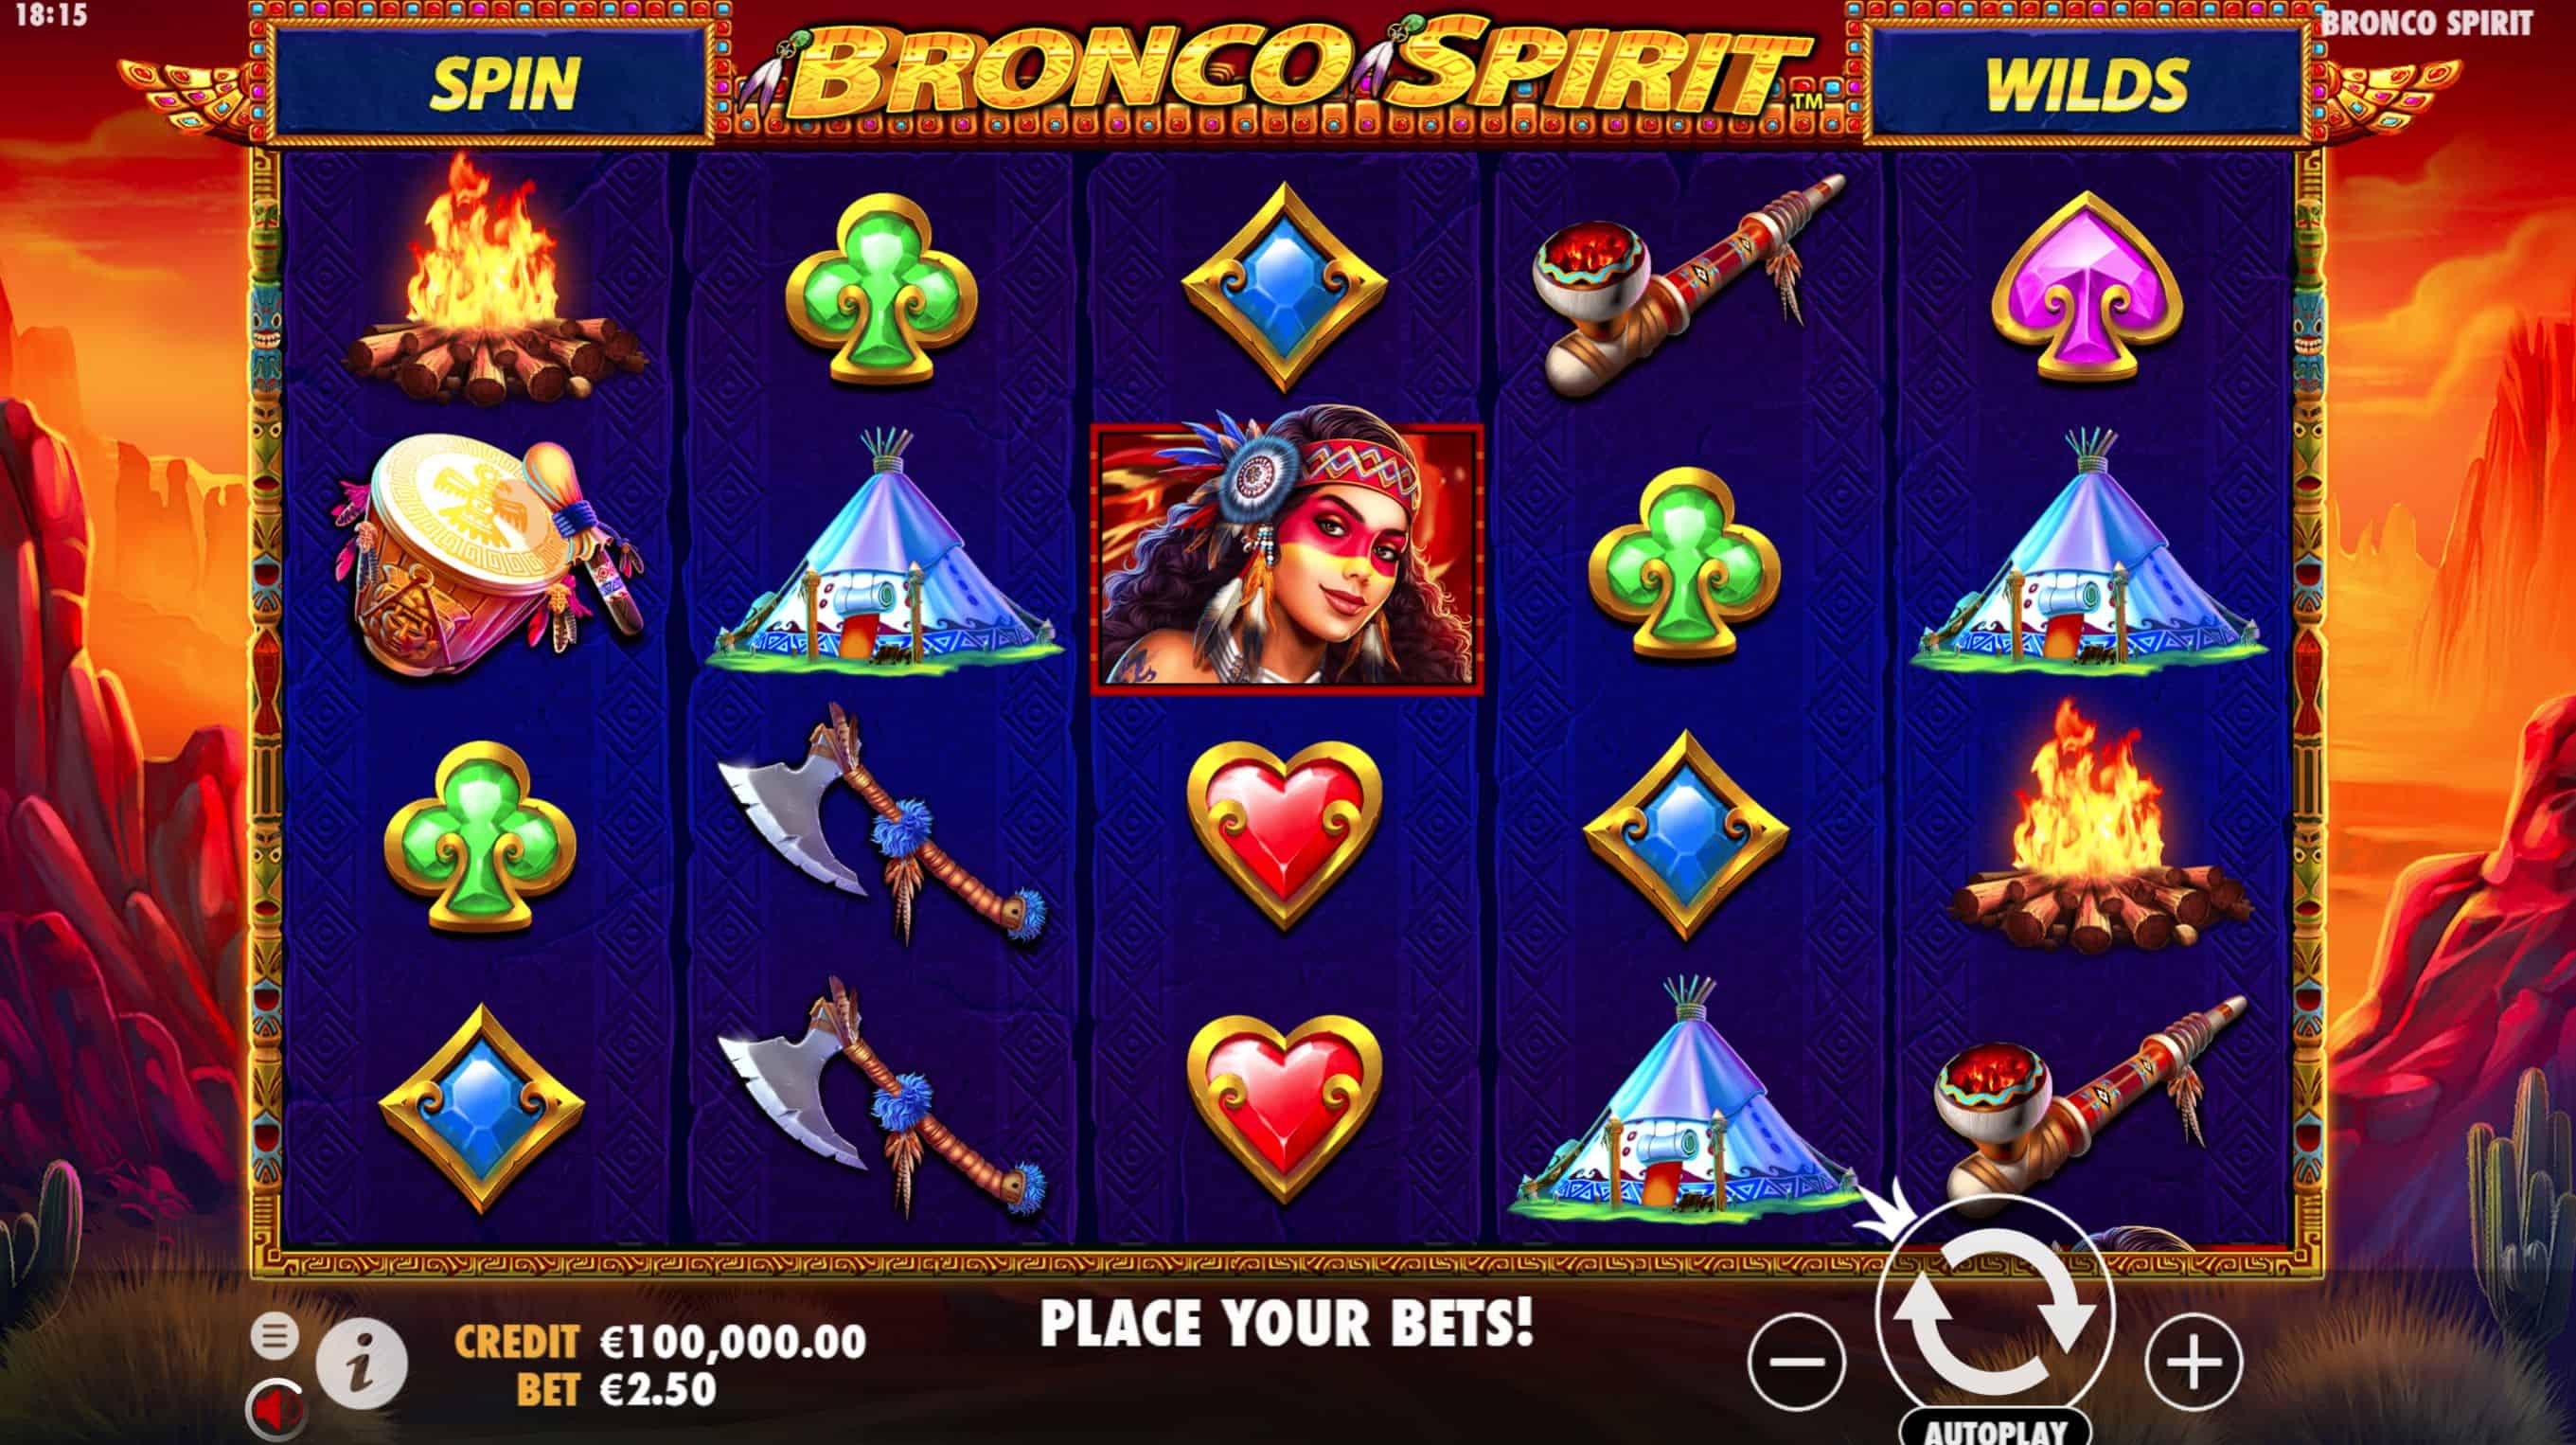 Bronco Spirit Slot Game Free Play at Casino Ireland 01